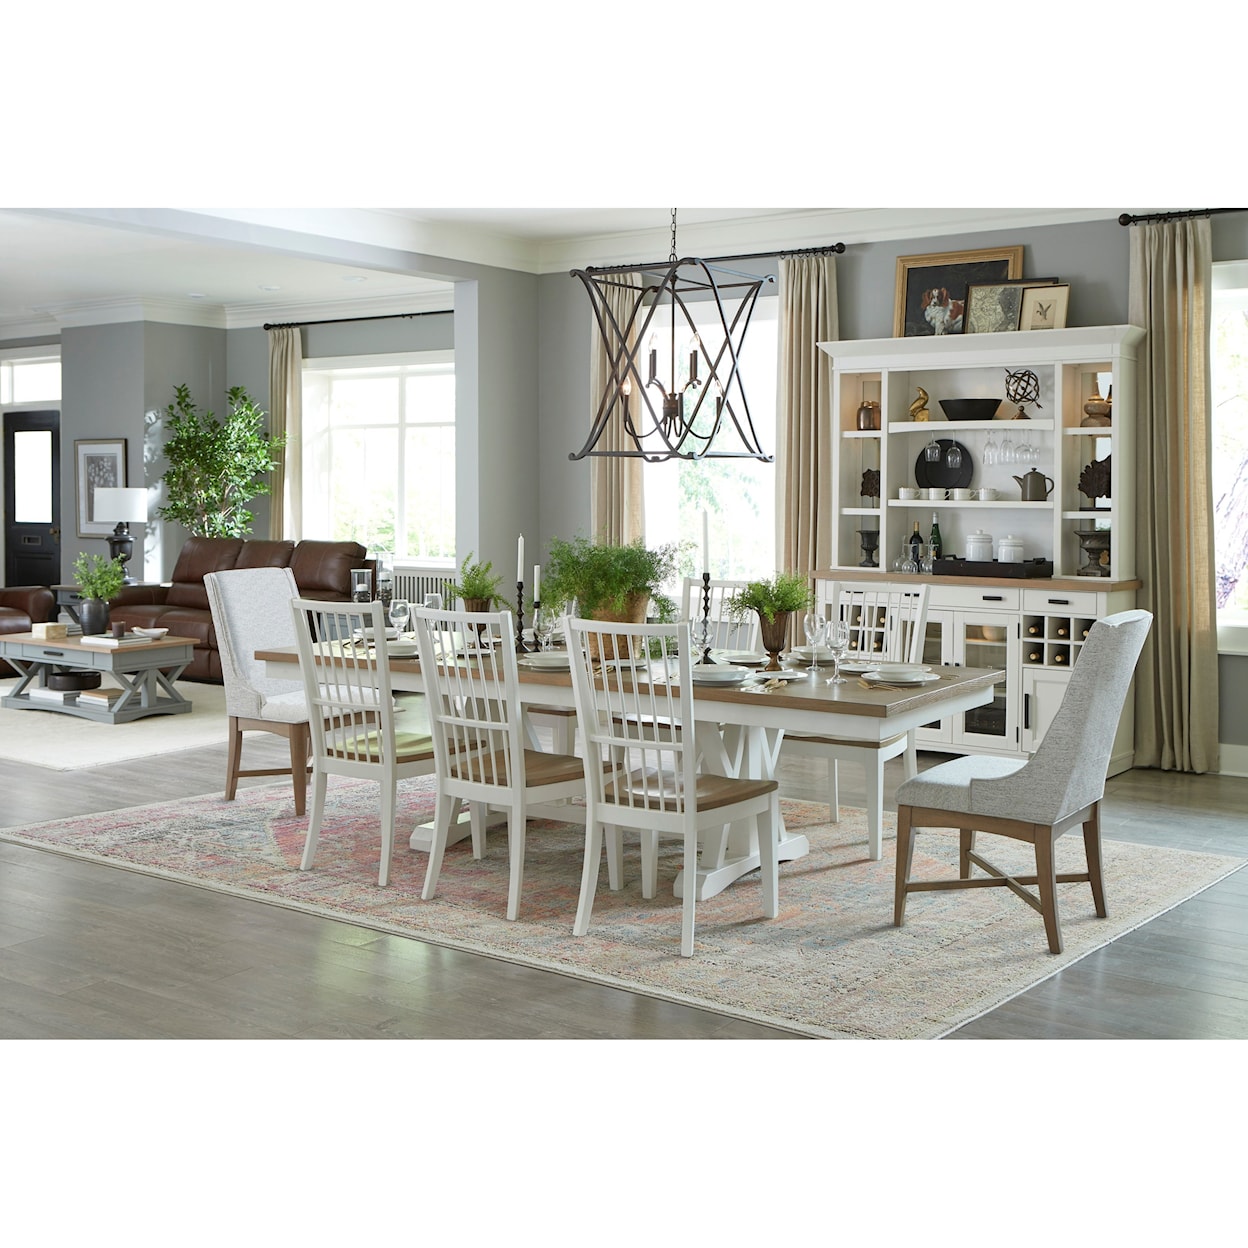 Paramount Furniture Americana Modern Formal Dining Room Group